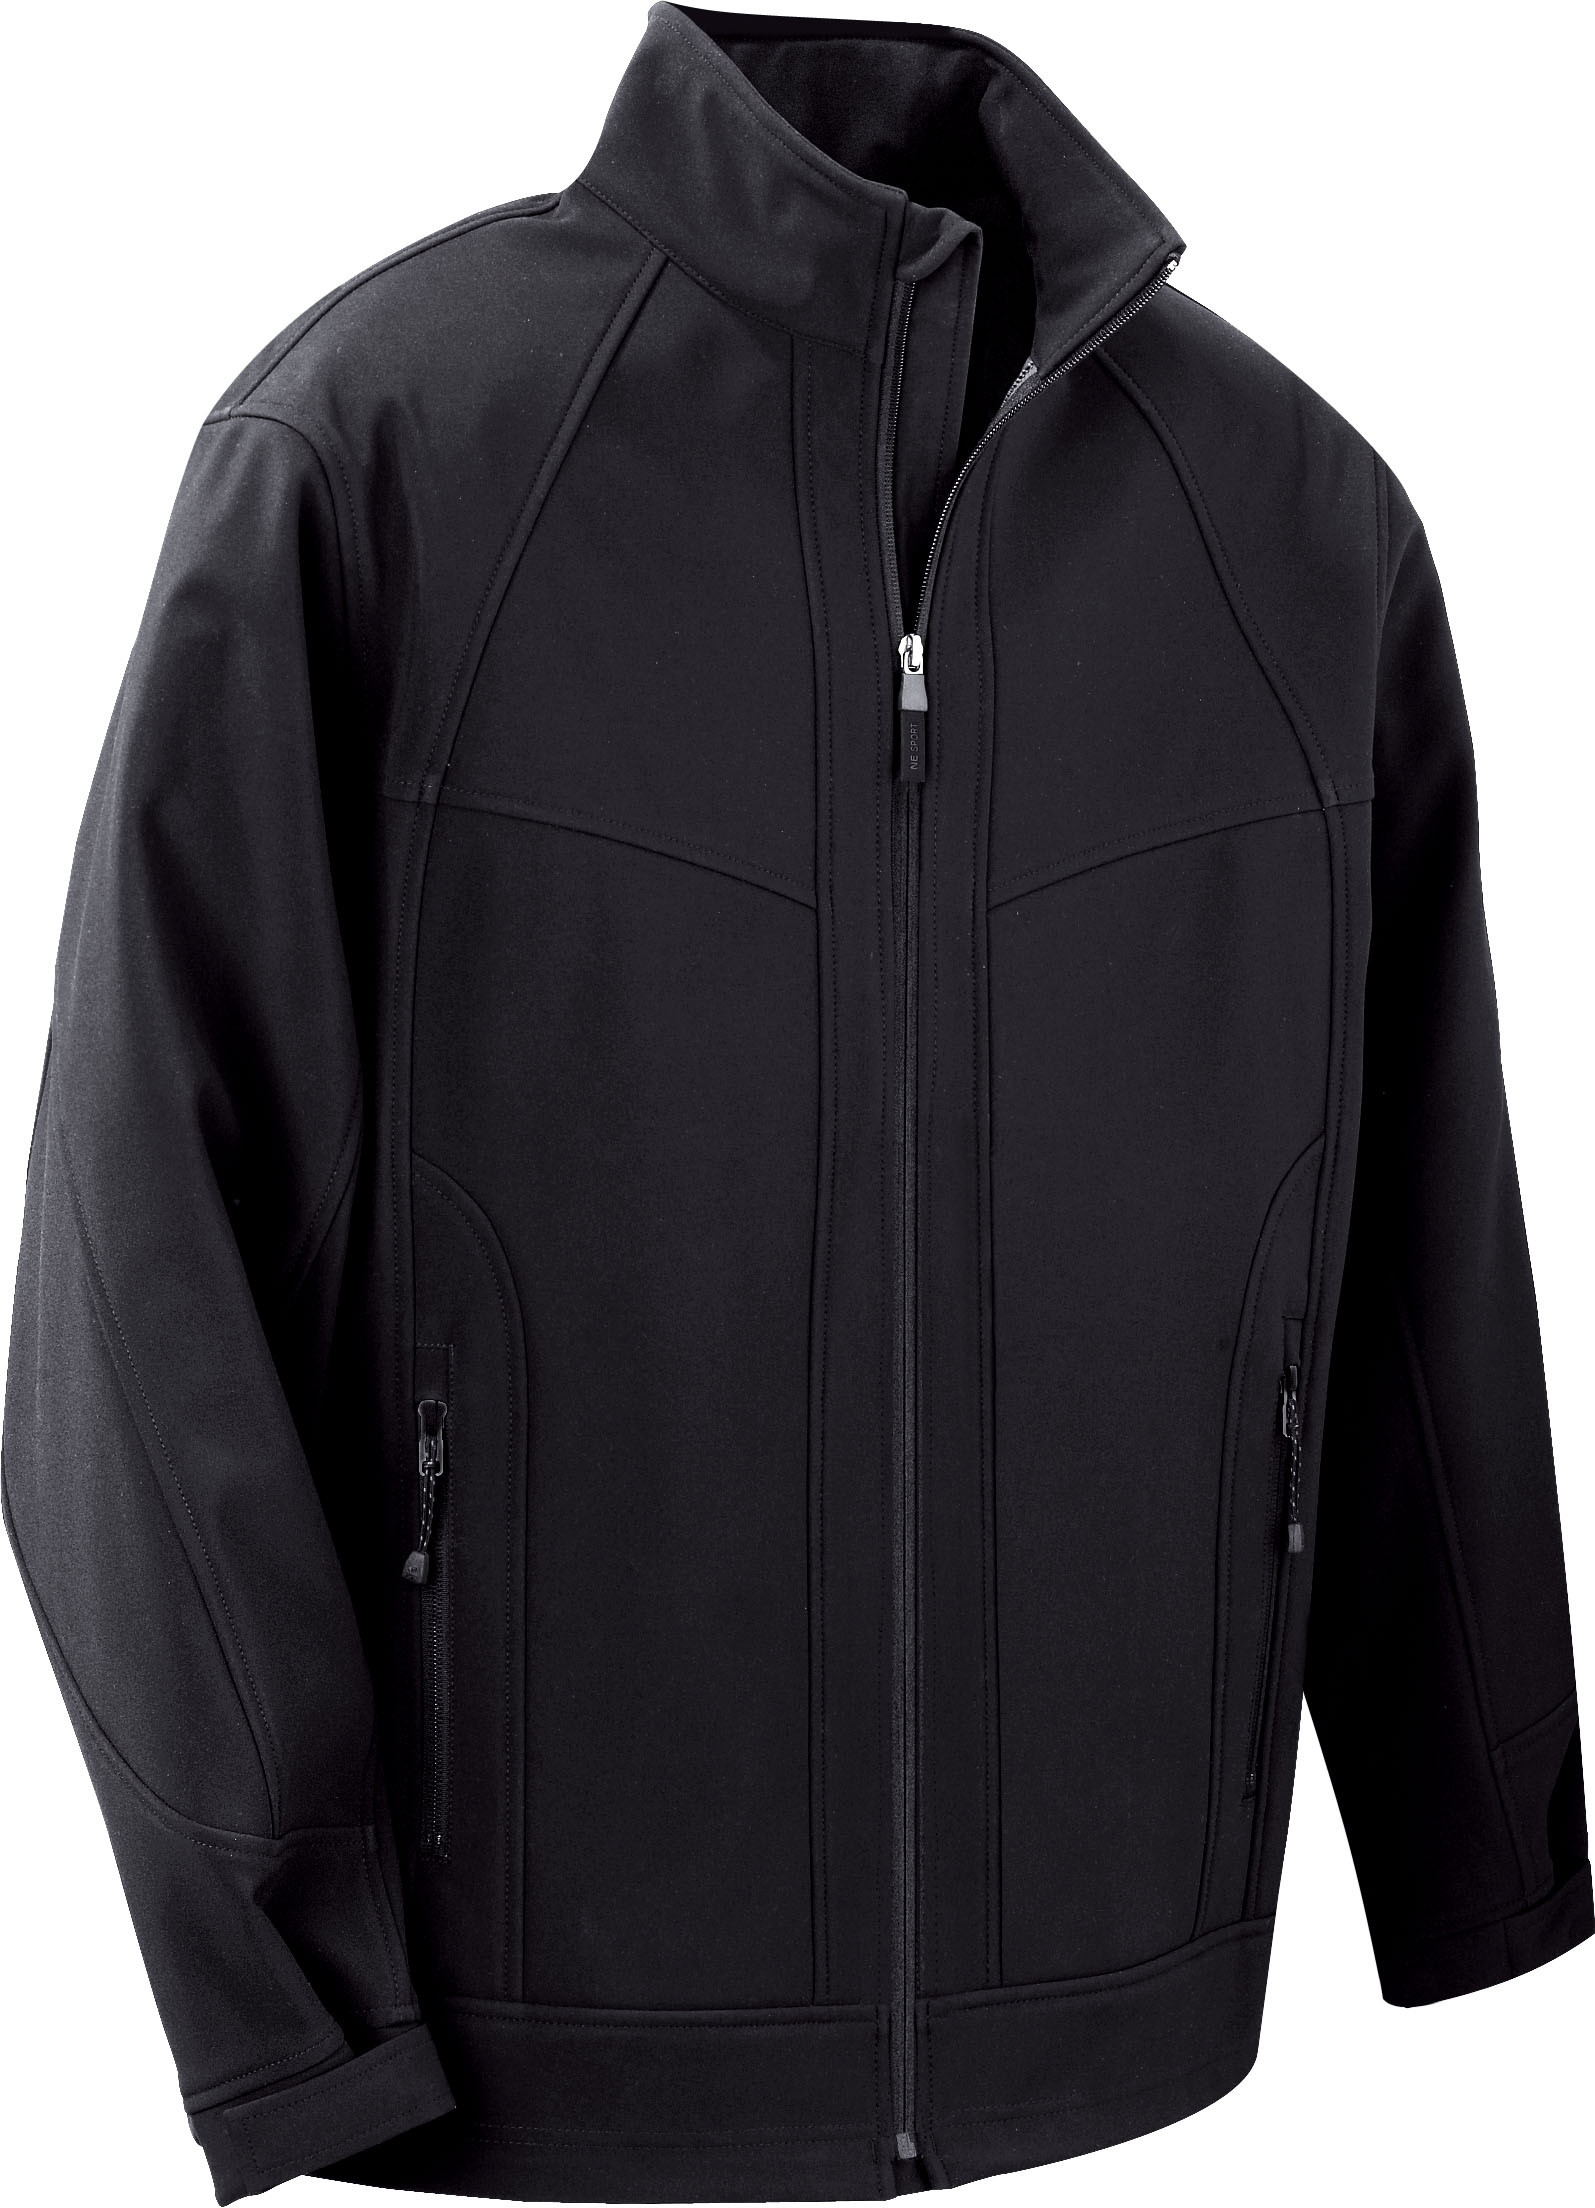 Ash City UTK 1 Warm.Logik 88604 - Men's 3-Layer Soft Shell Jacket $76.08